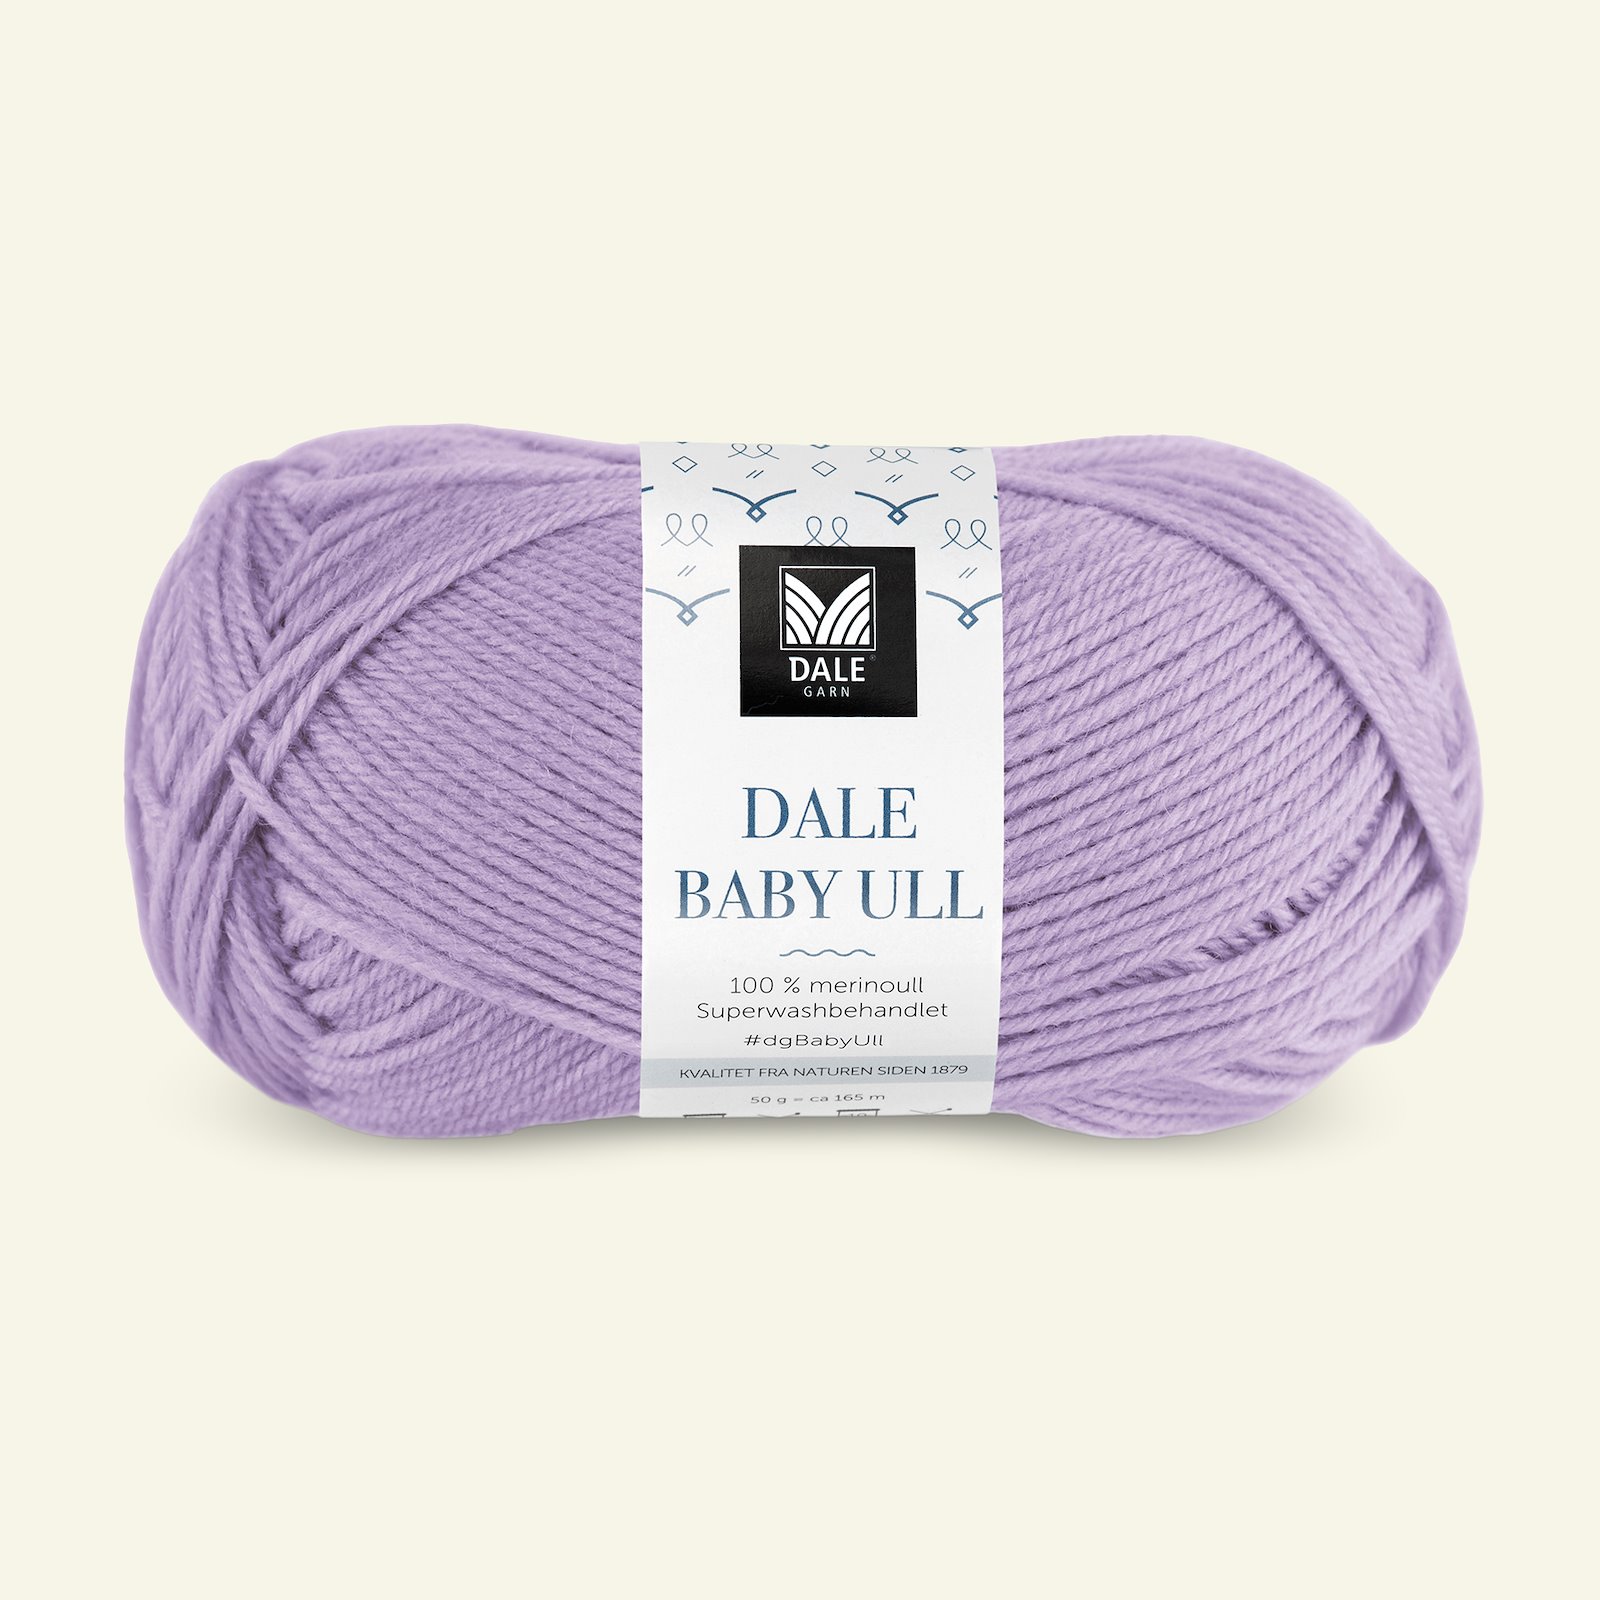 Dale Garn, 100% merino yarn Baby Ull, light lavender (8532)